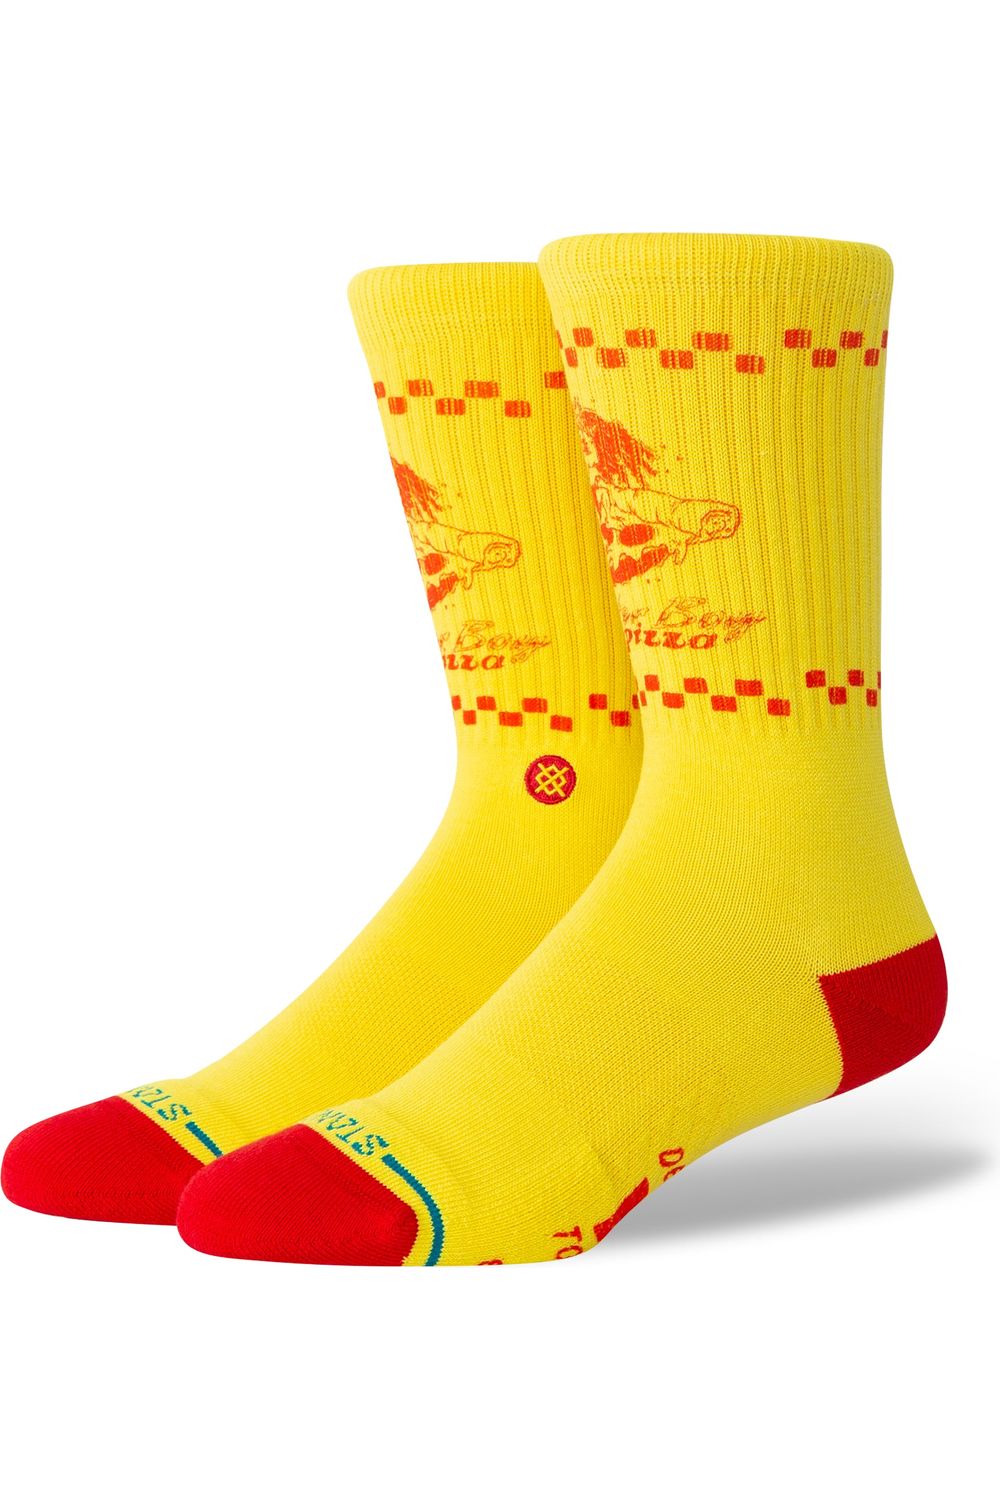 Stance Surfer Boy Socks Yellow